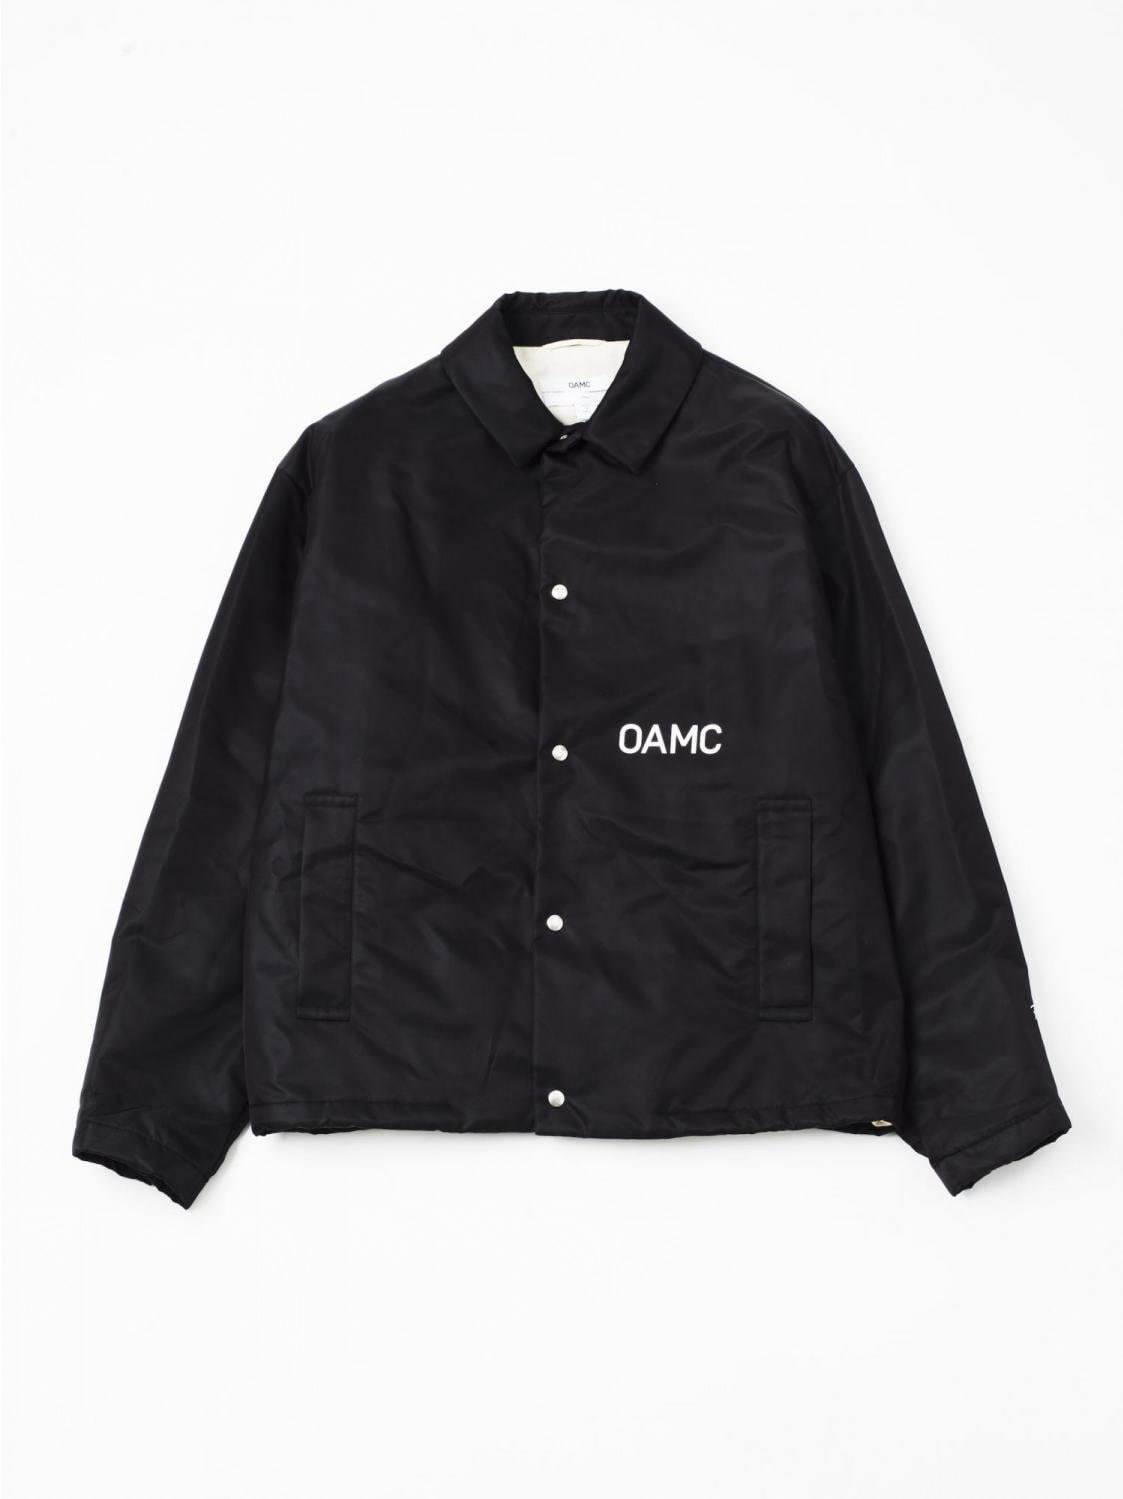 OAMCショースタッフ着用のユニフォーム、ロンハーマン10周年記念デザインで登場｜写真8